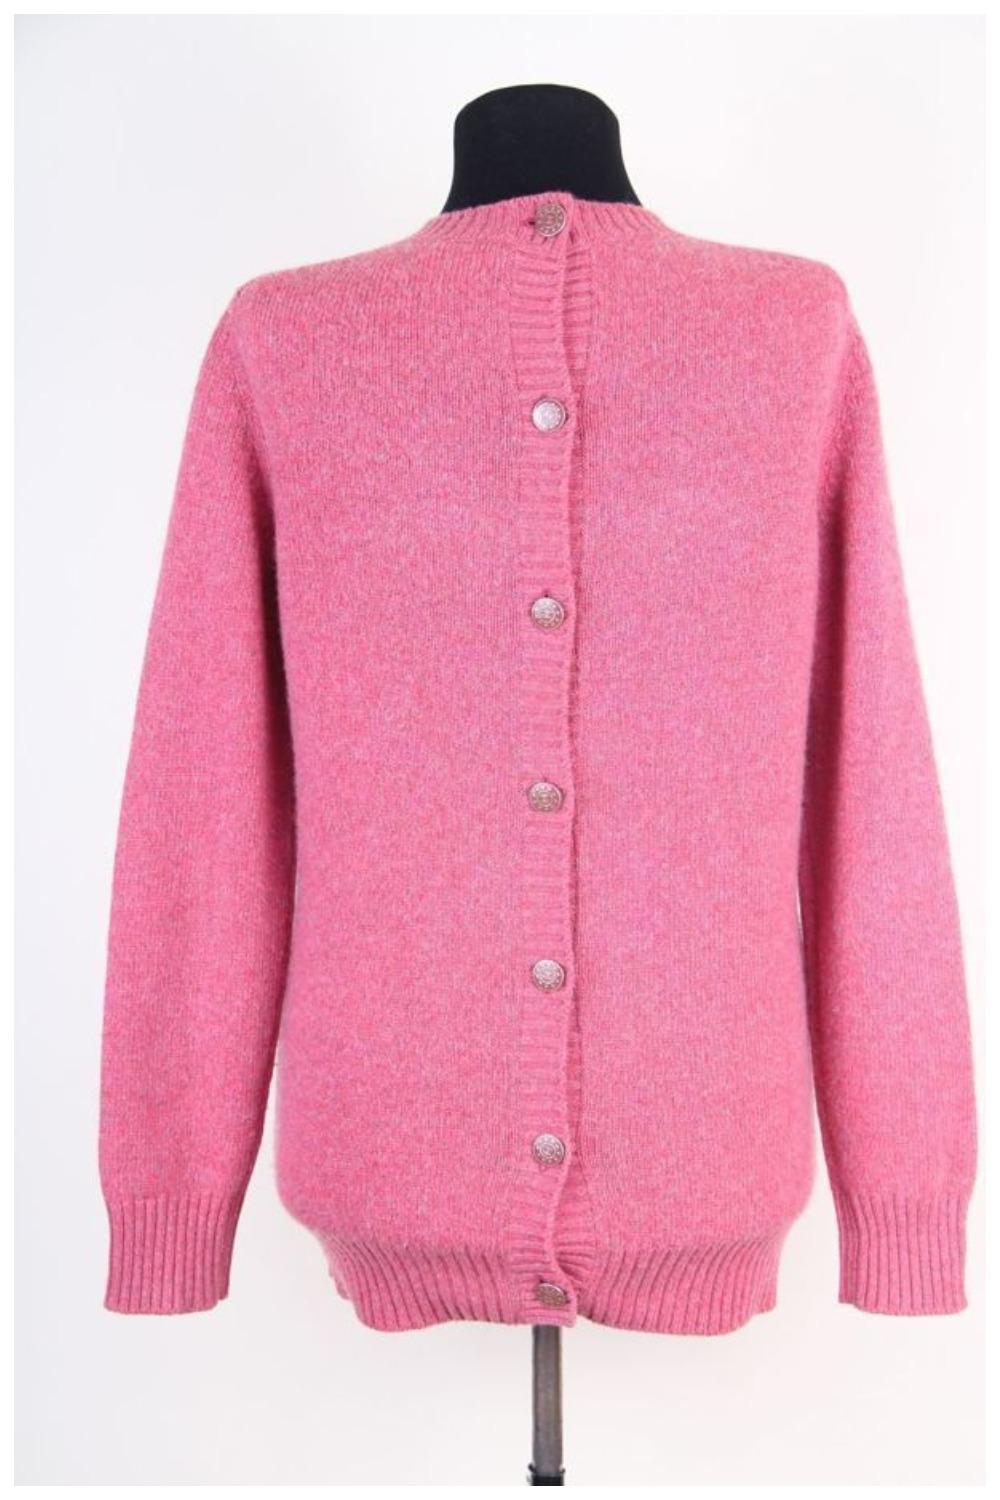 Chanel & Karl Lagerfeld 13P cashmere sweater jumper cardigan pink 2013 4